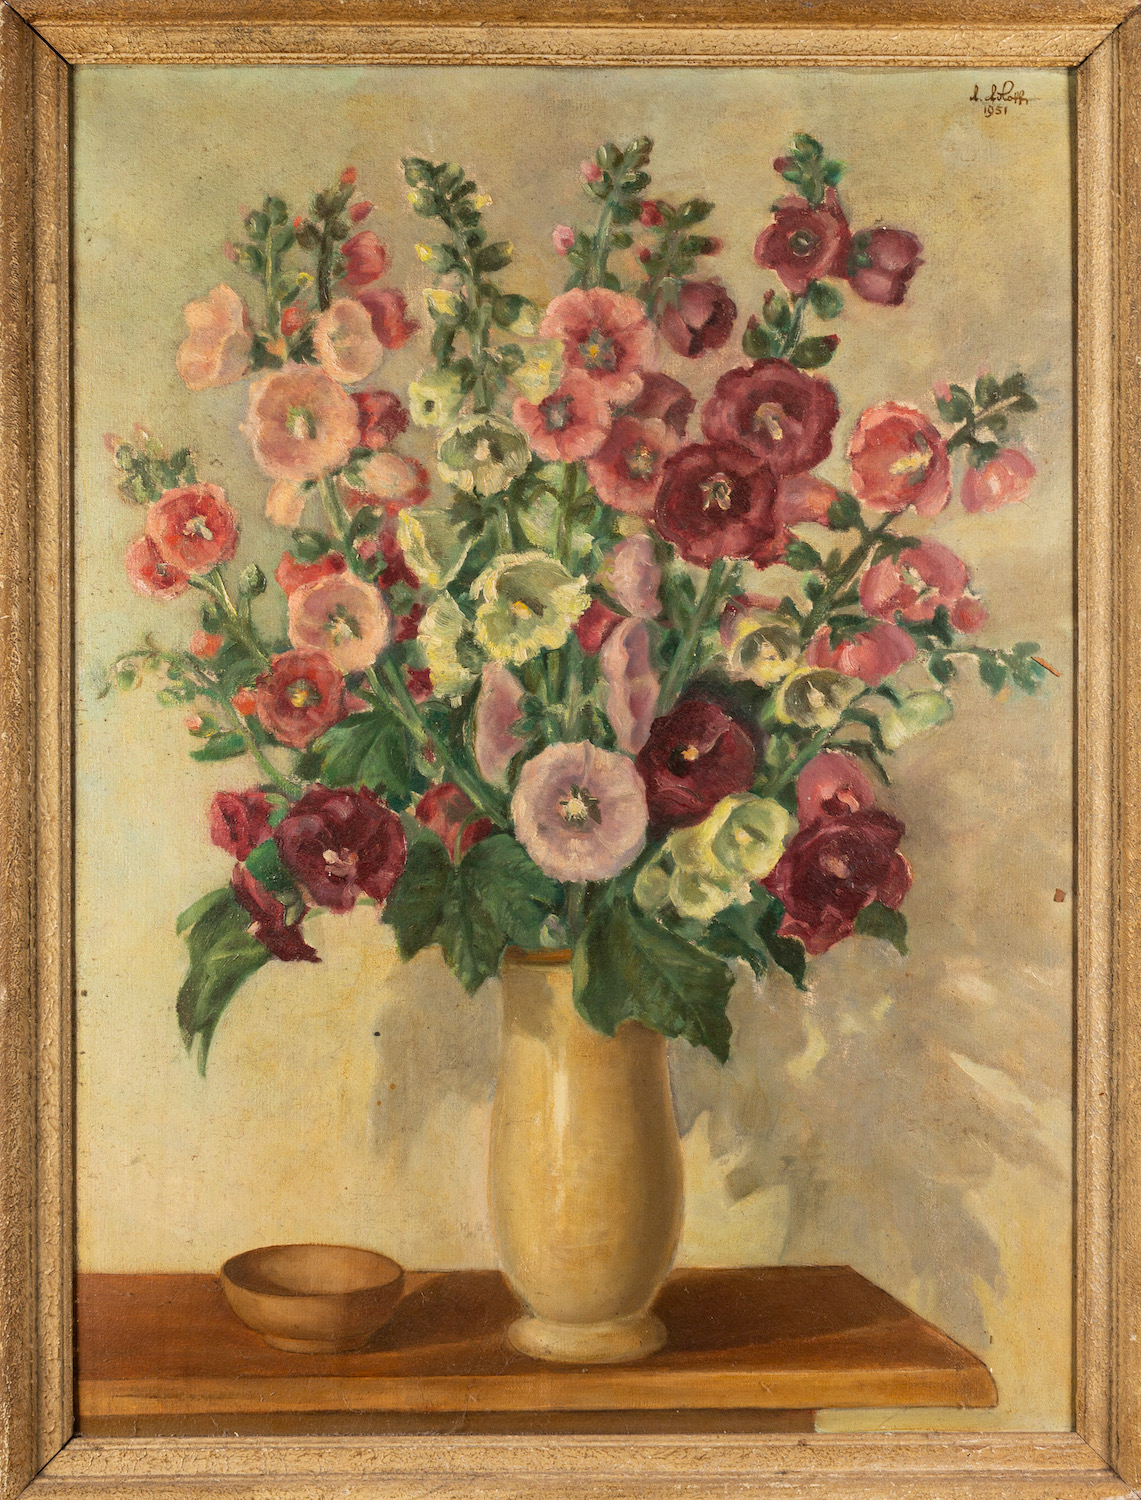 Five flower studies, one by G. Bordewich (20th Century) - Summer bouquet - Oil on board - 60 x 48. - Image 4 of 5